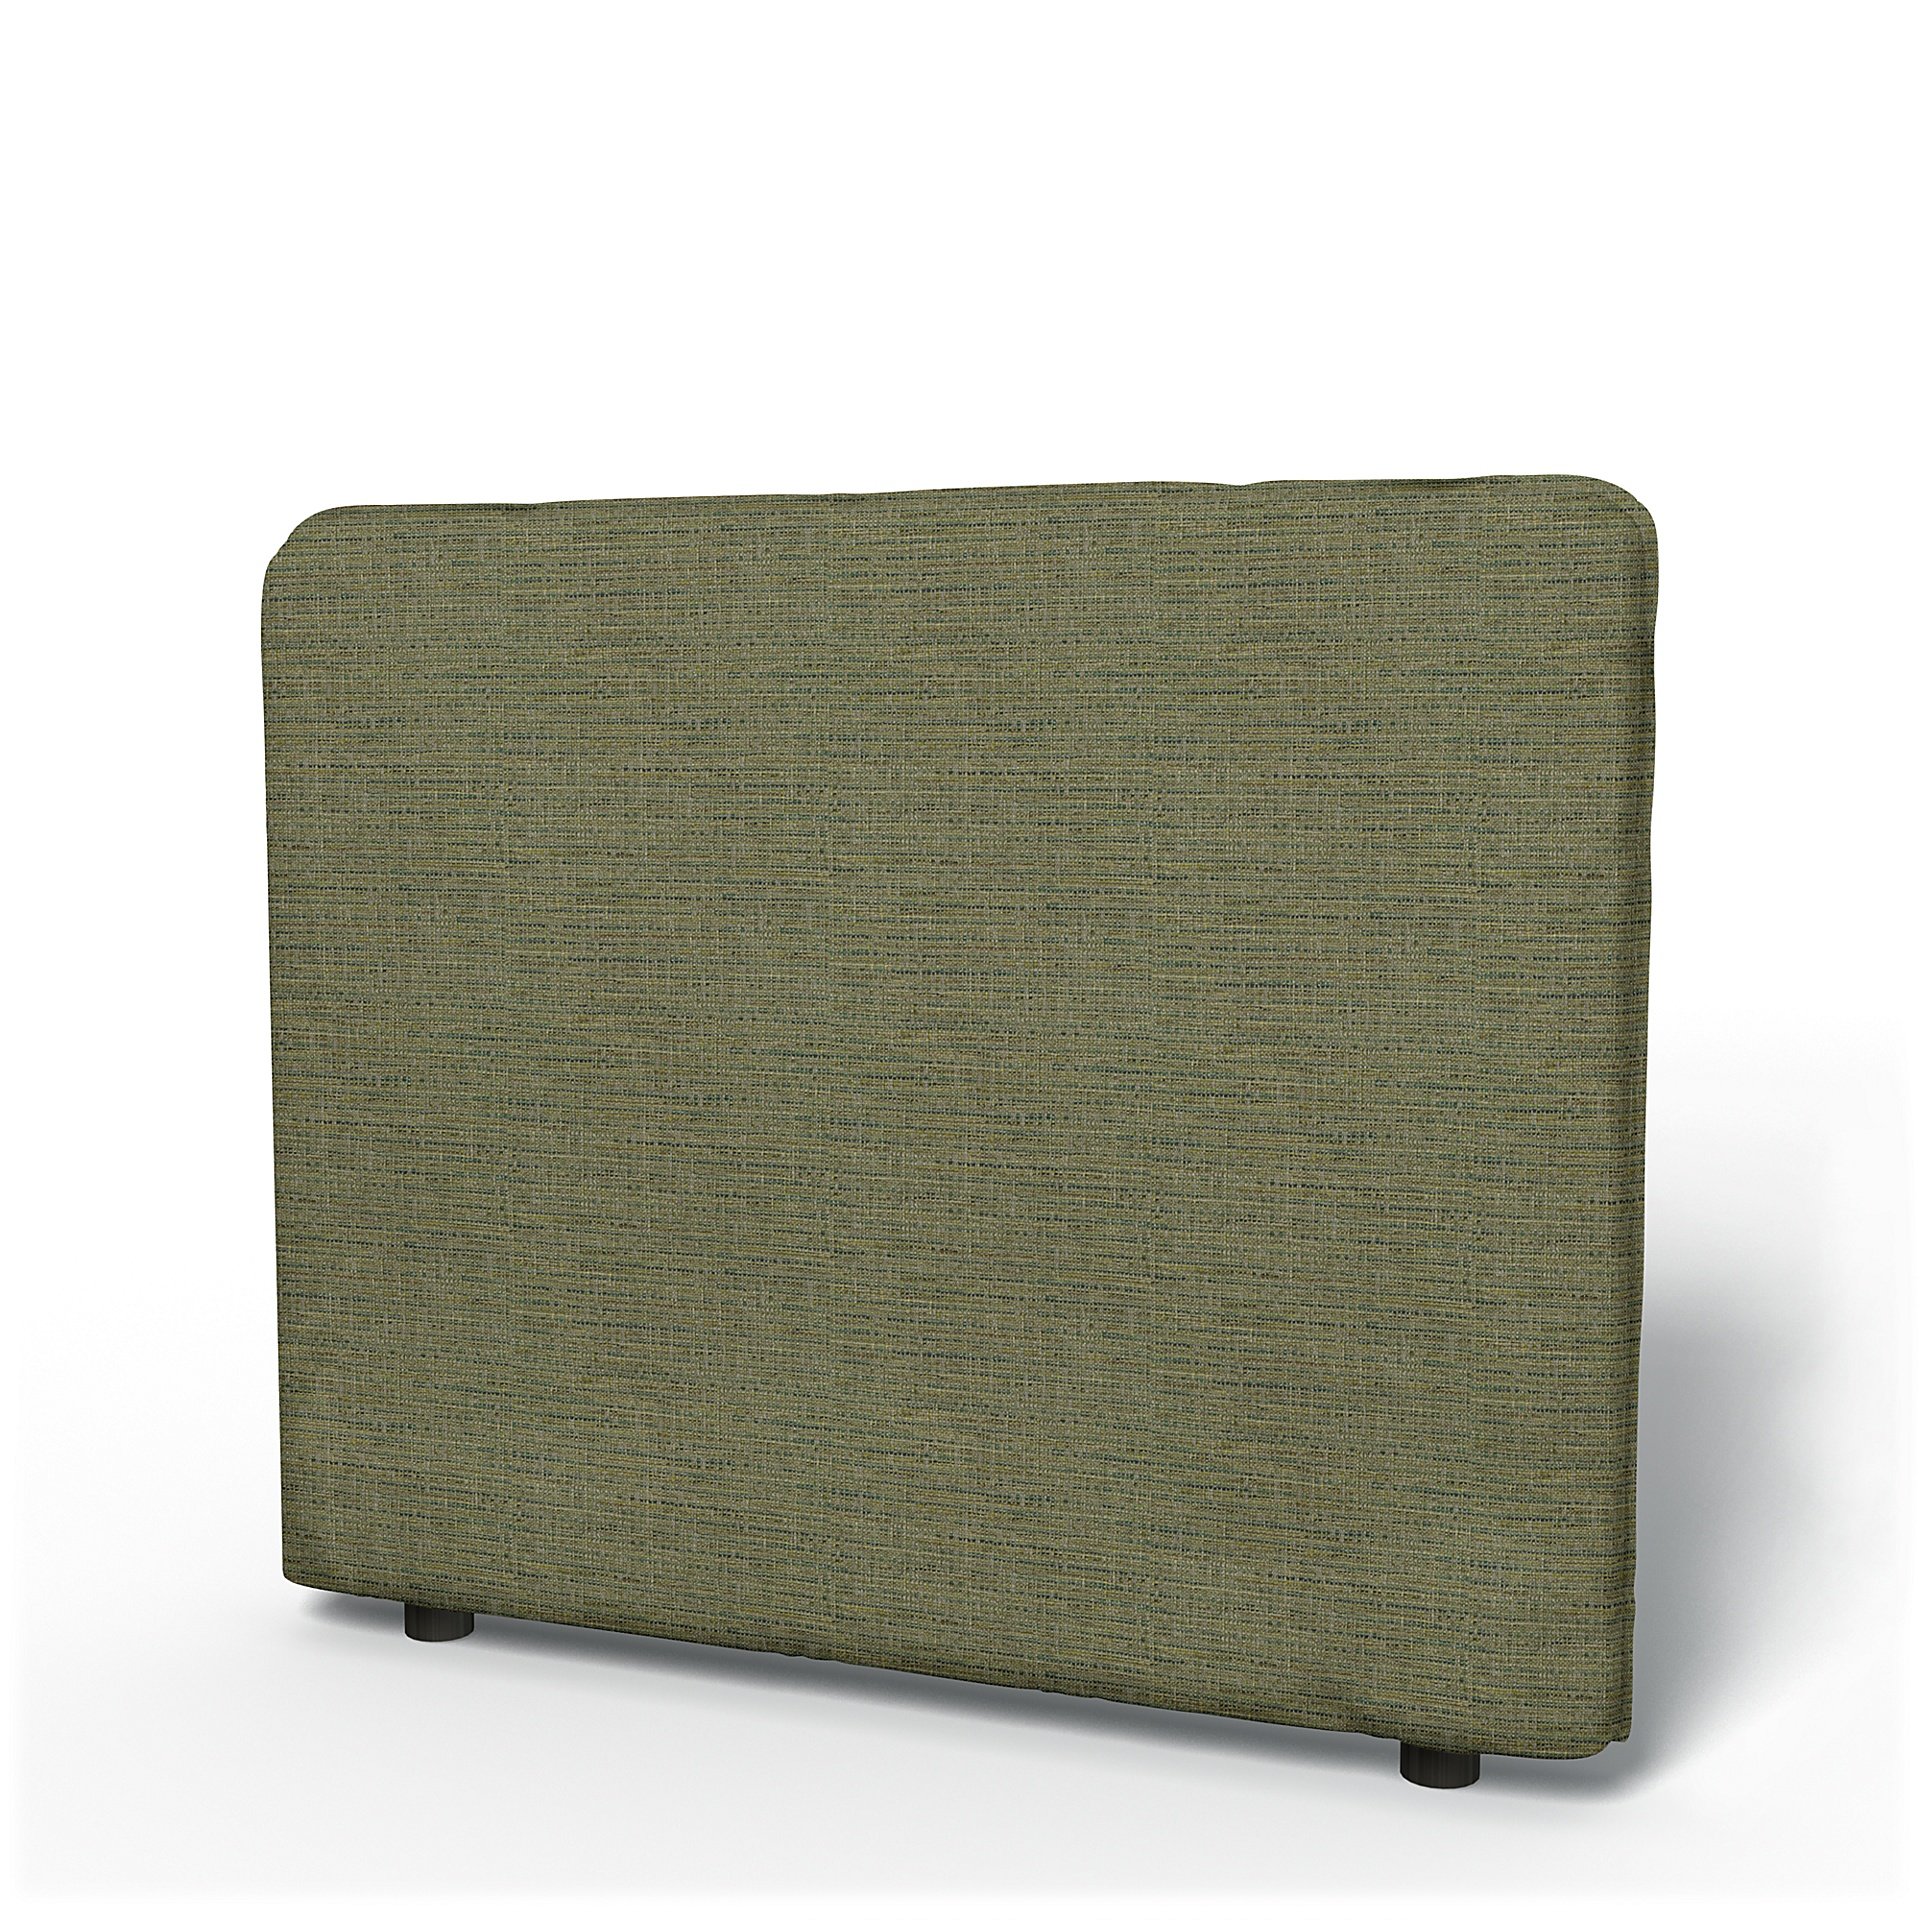 IKEA - Vallentuna Low Backrest Cover 100x80cm 39x32in, Meadow Green, Boucle & Texture - Bemz